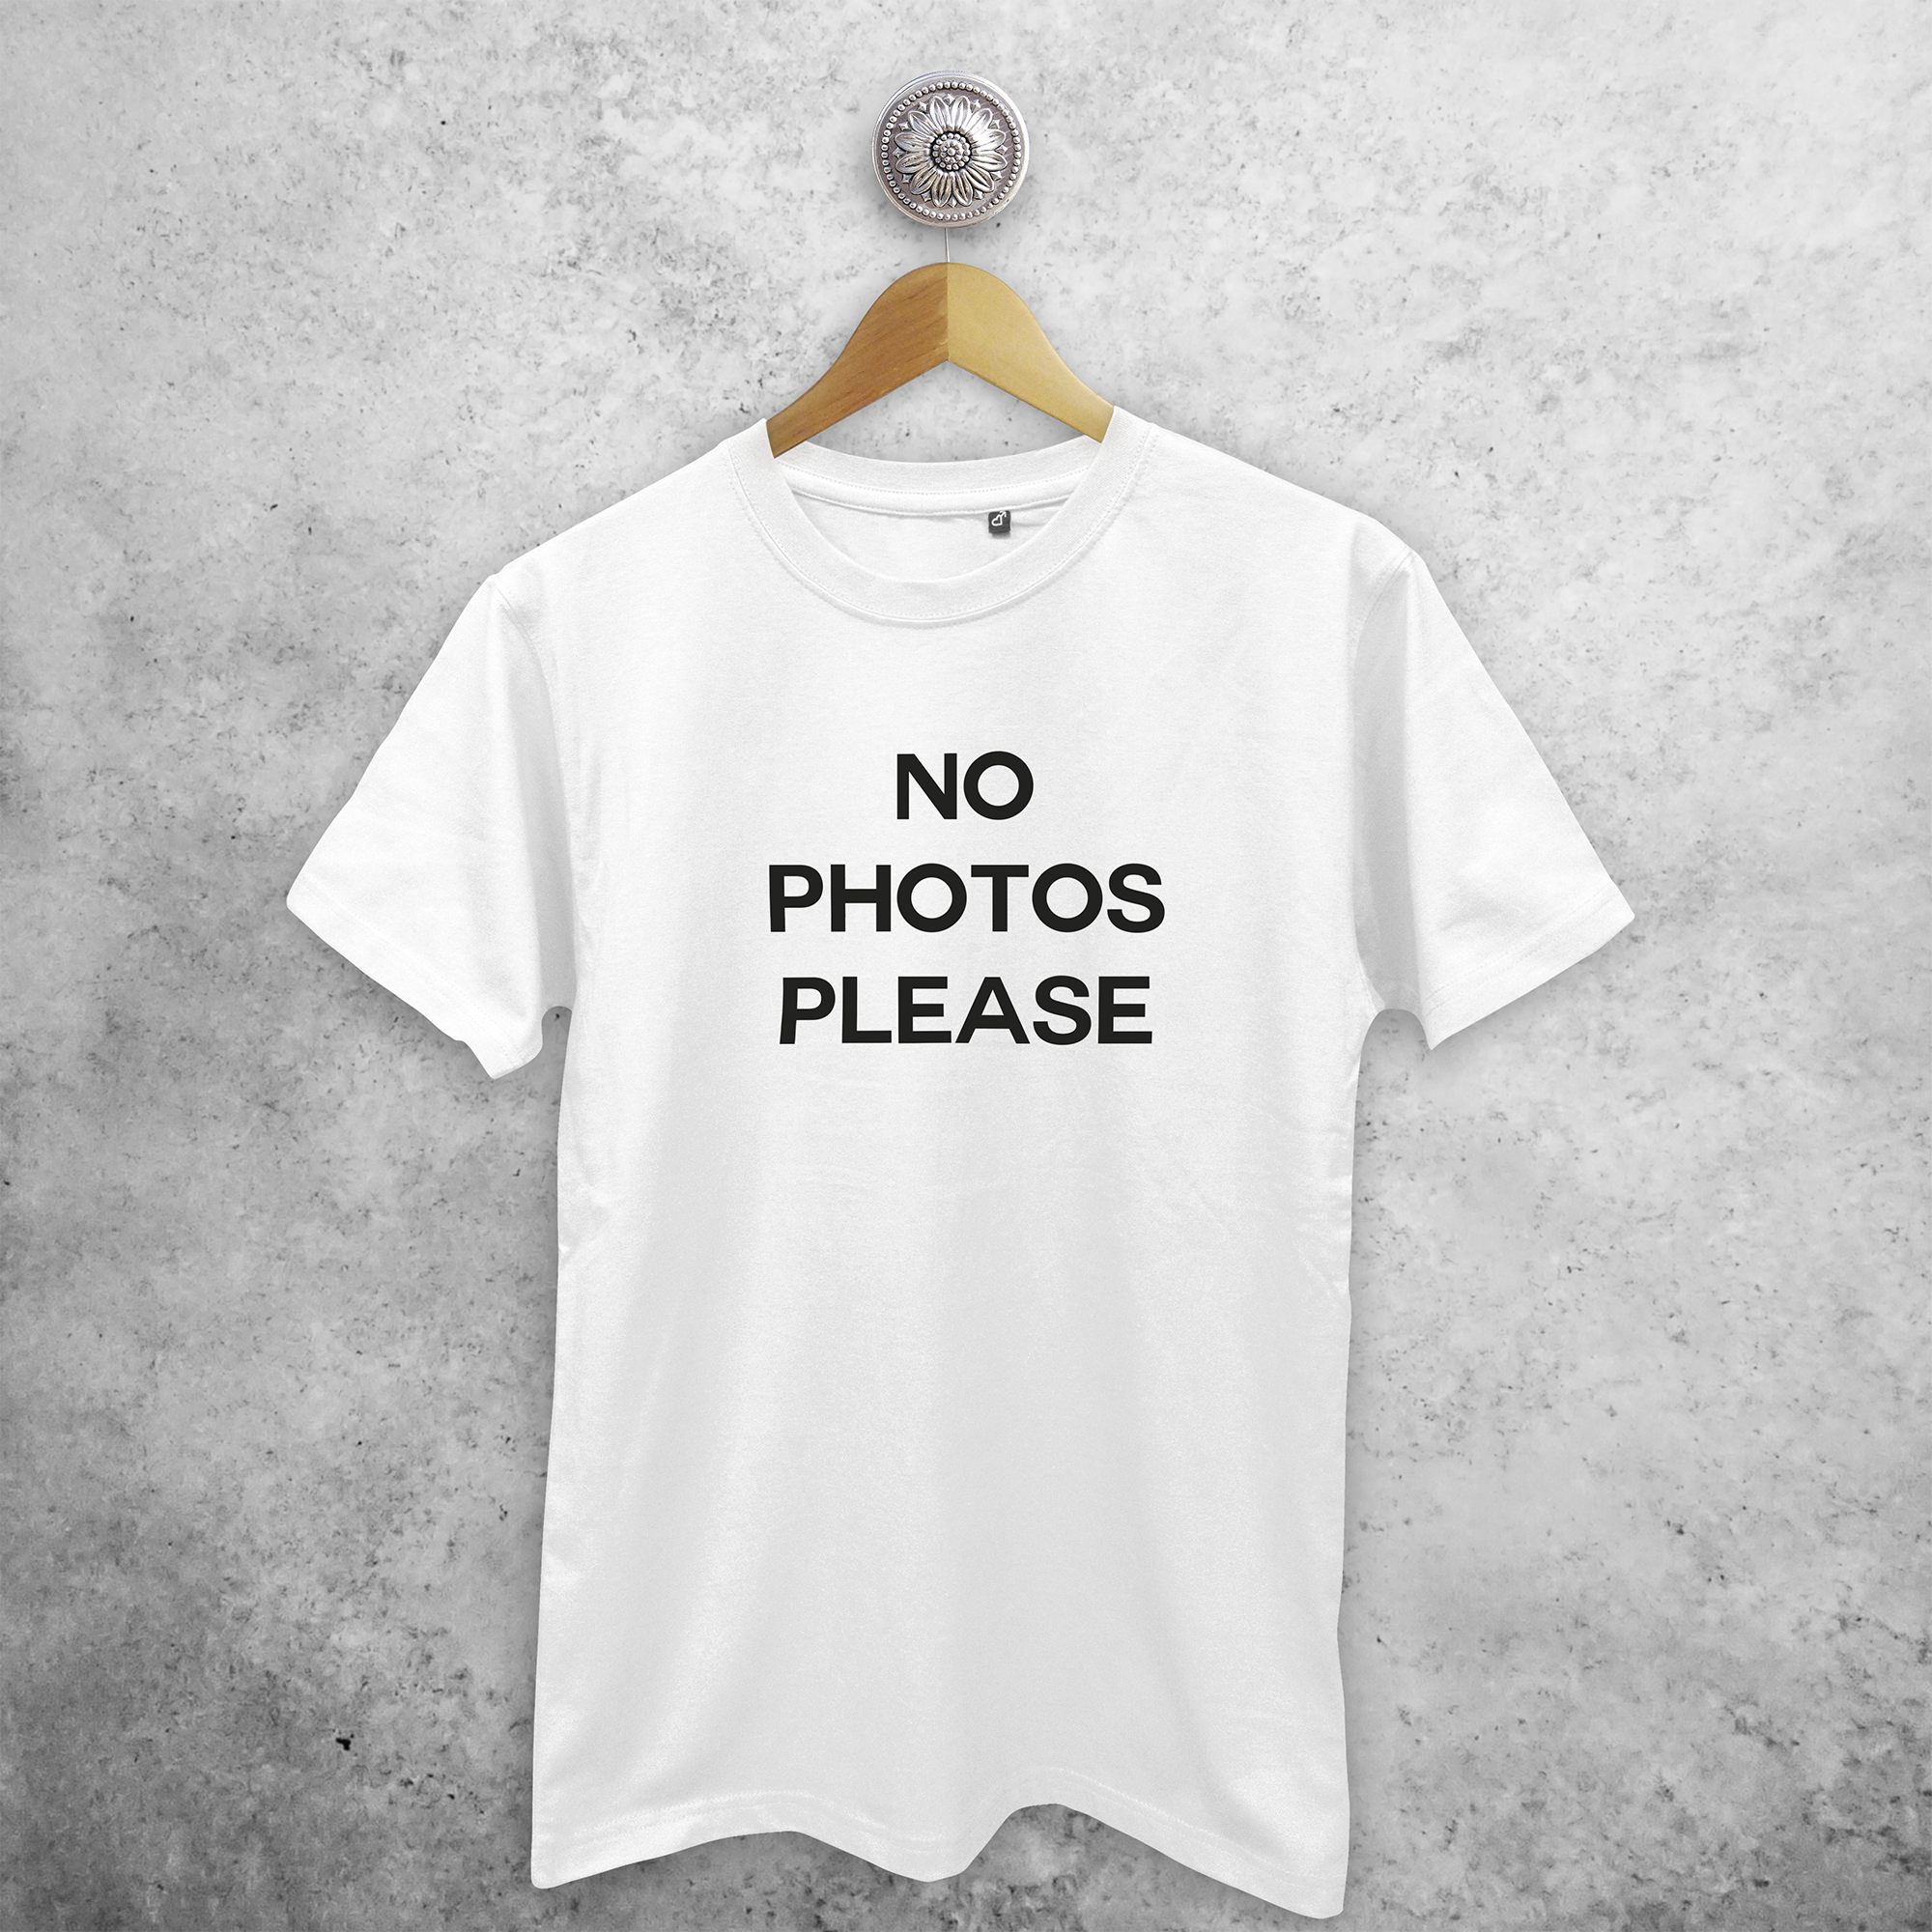 'No photos please' adult shirt